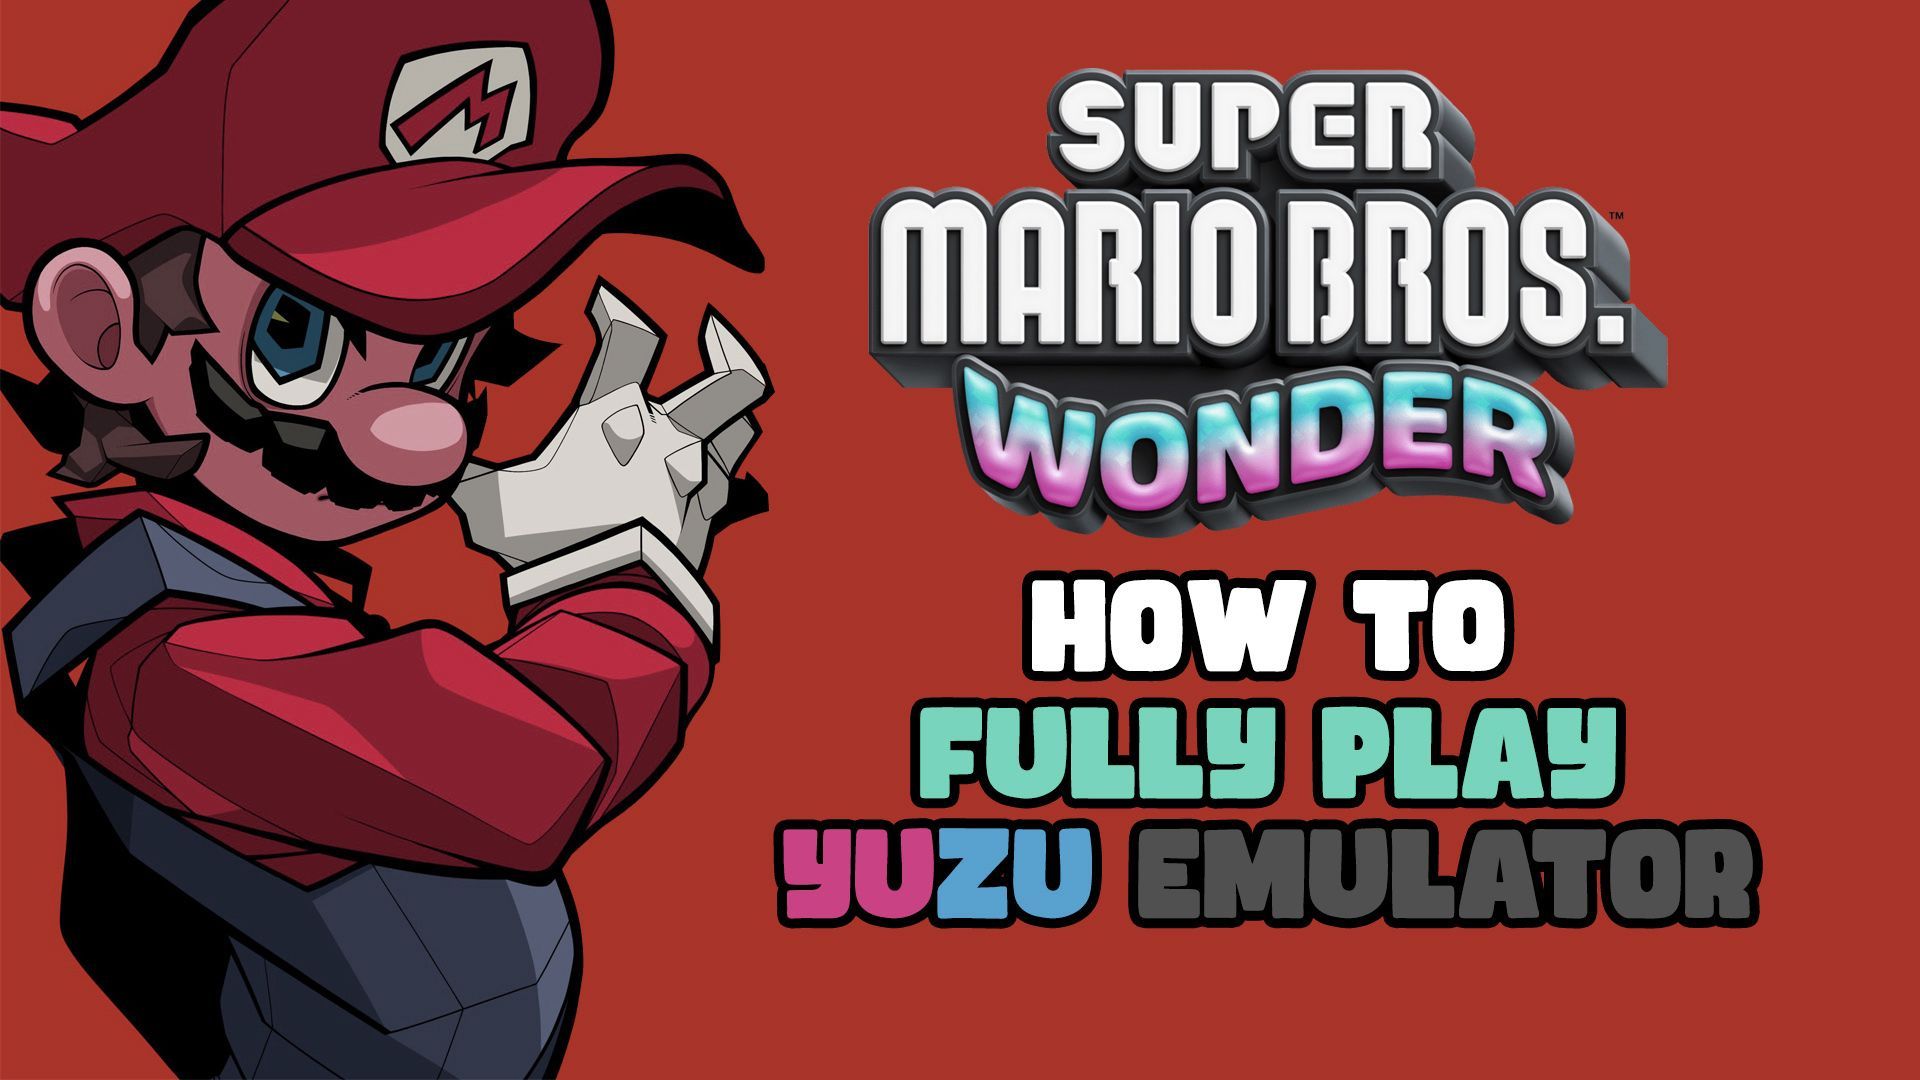 How To Play Super Smash Bros Ultimate On PC? [Yuzu Emulator]